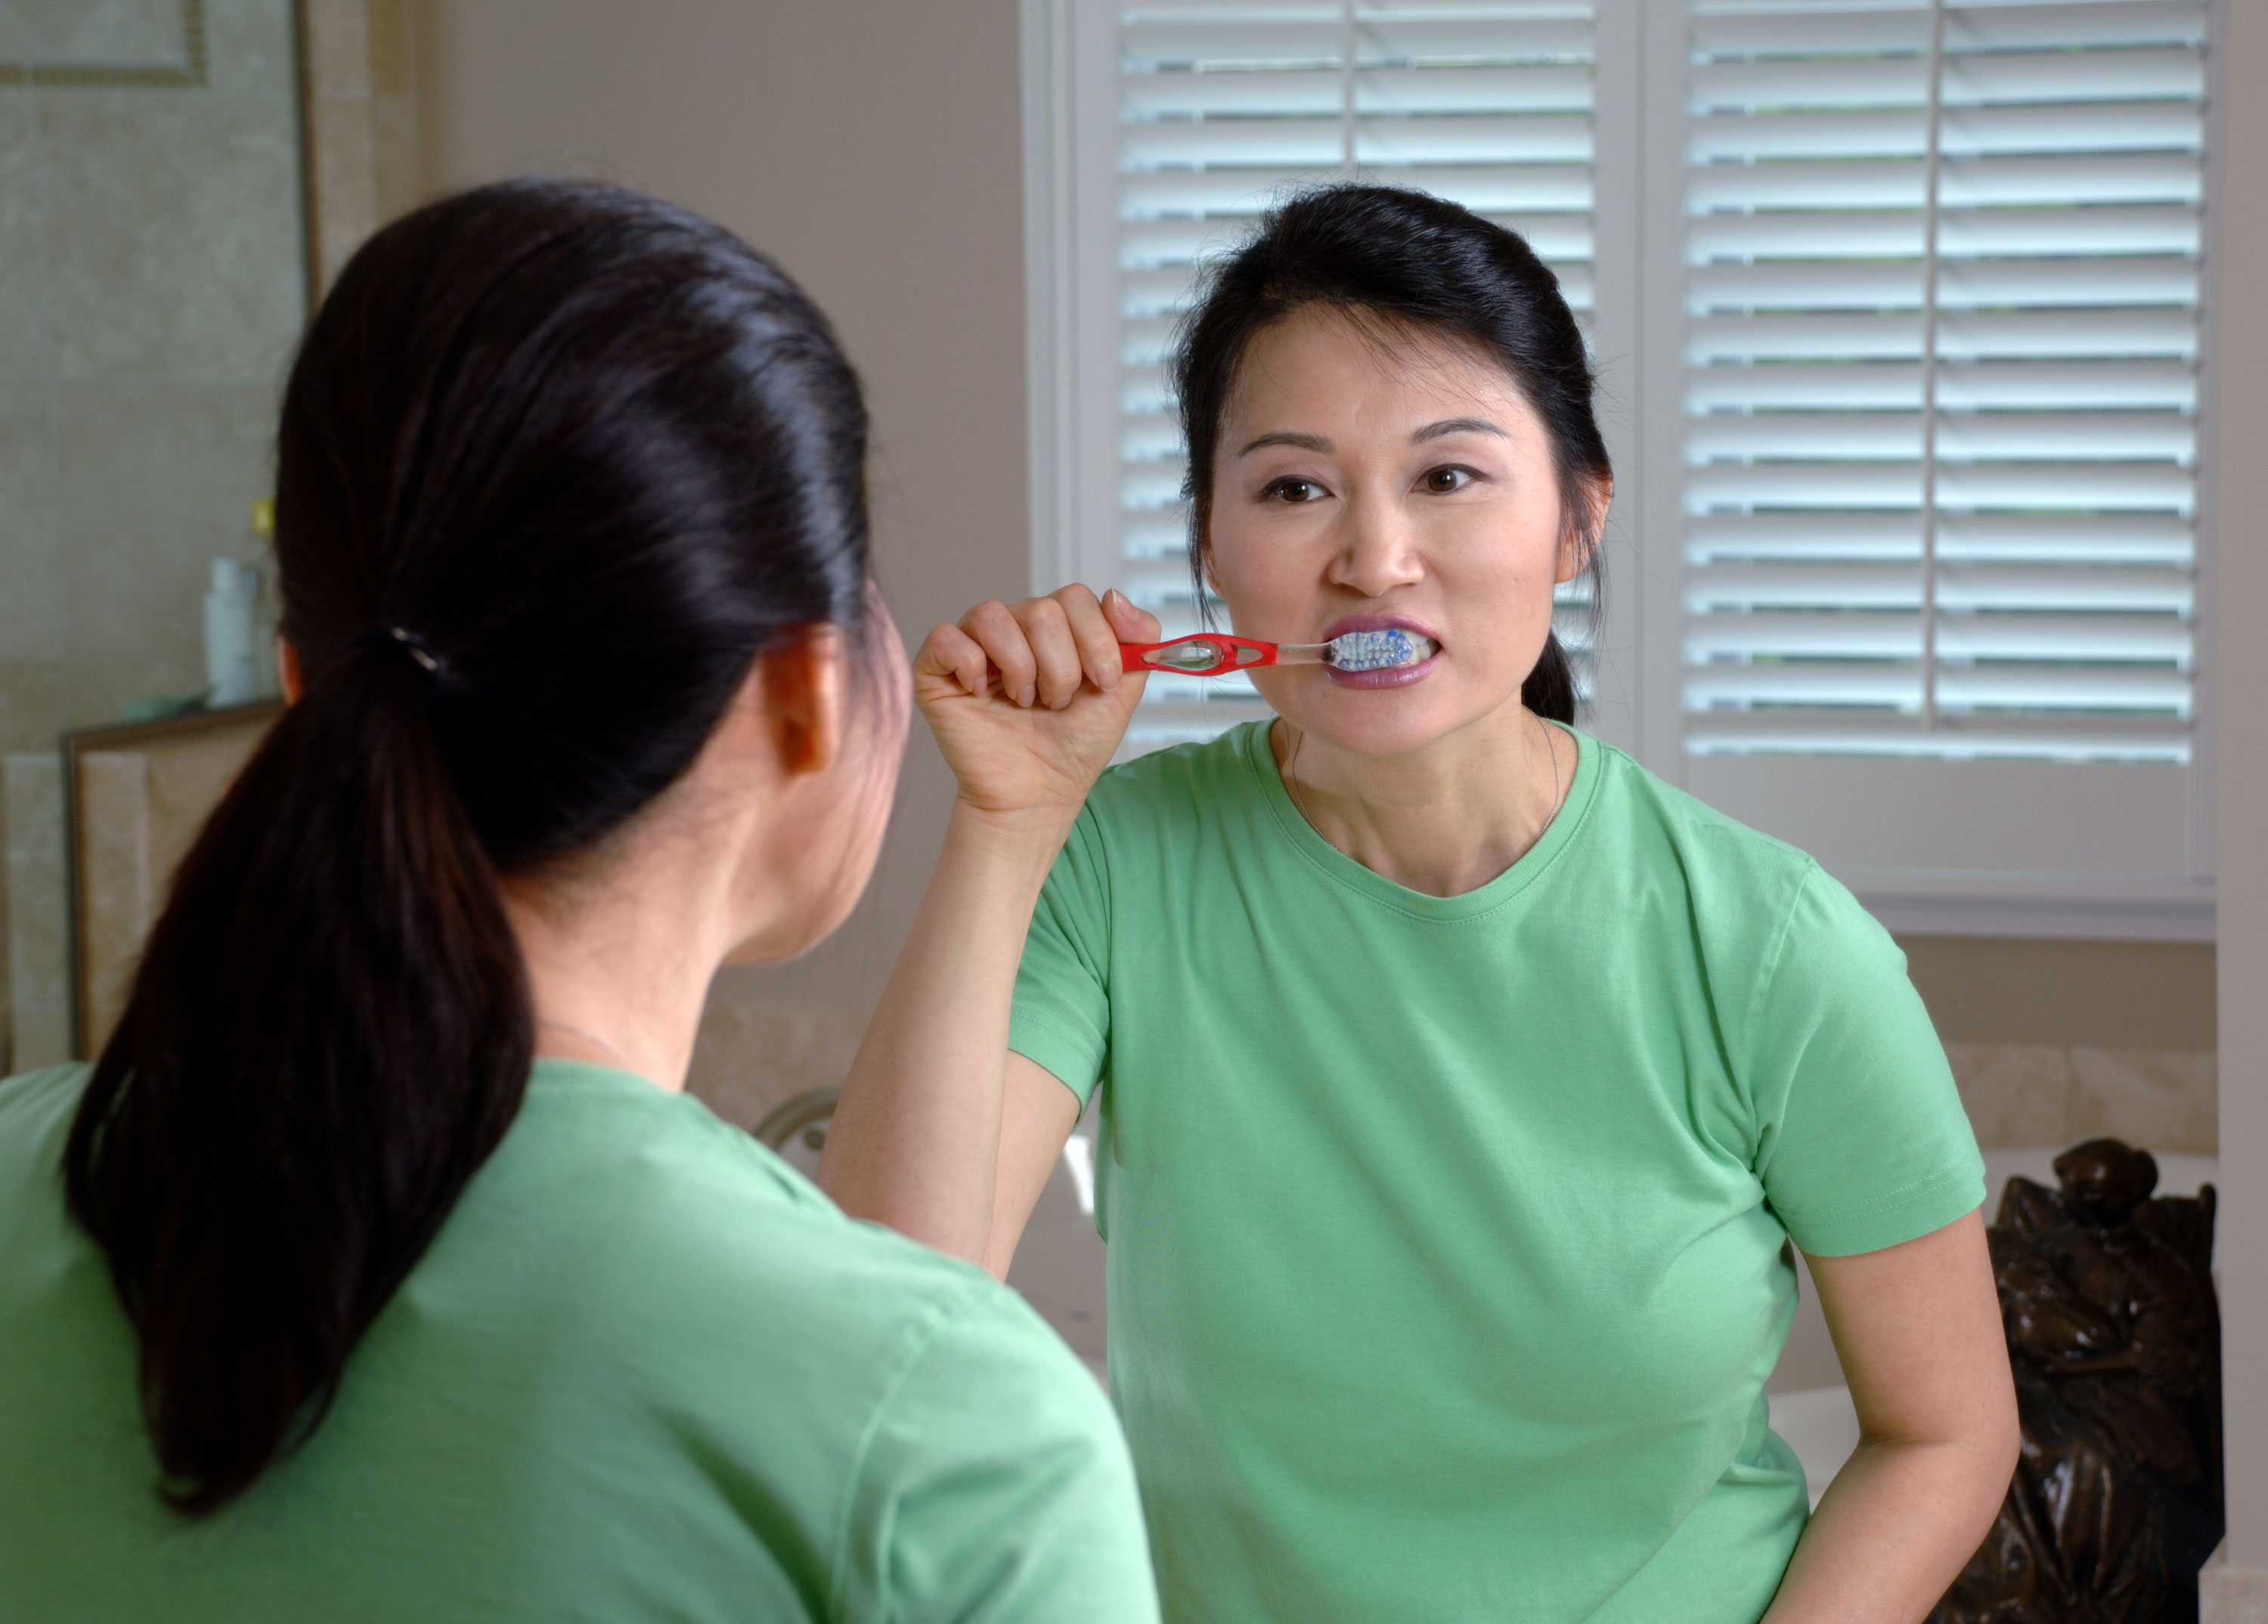 File:Woman brushing teeth.jpg - Wikimedia Commons